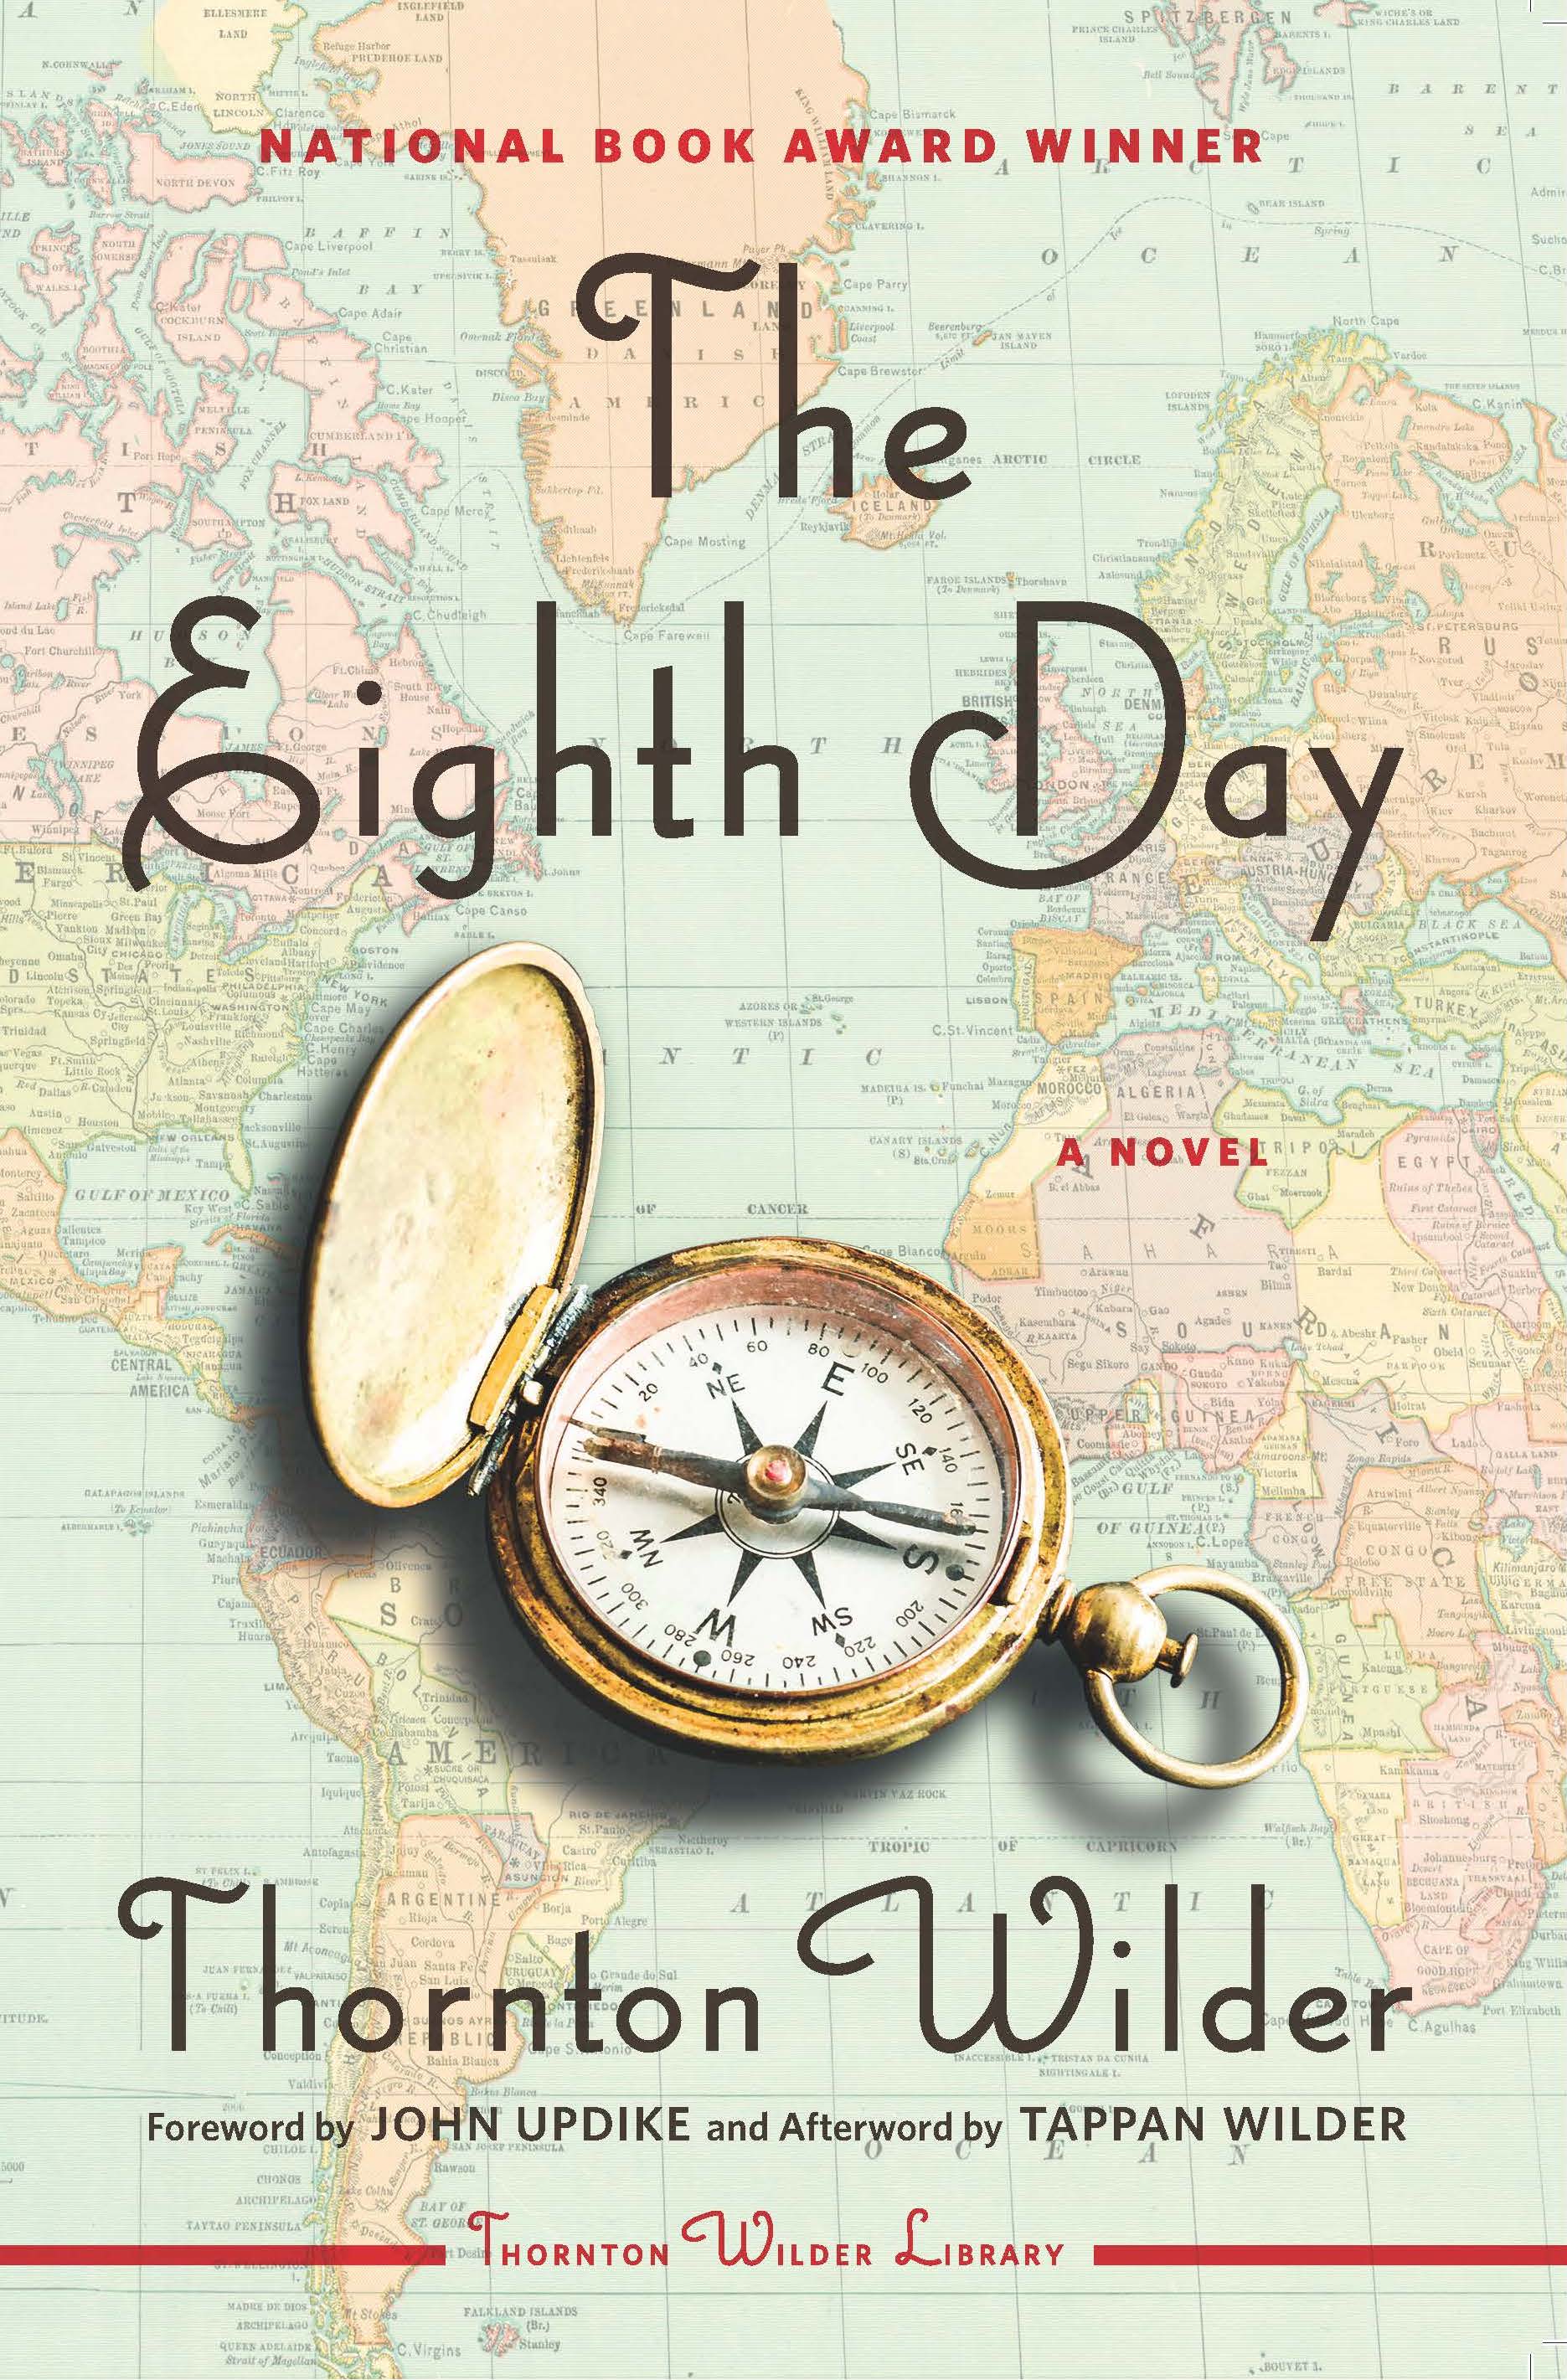 The Eighth Day, by Thornton Wilder